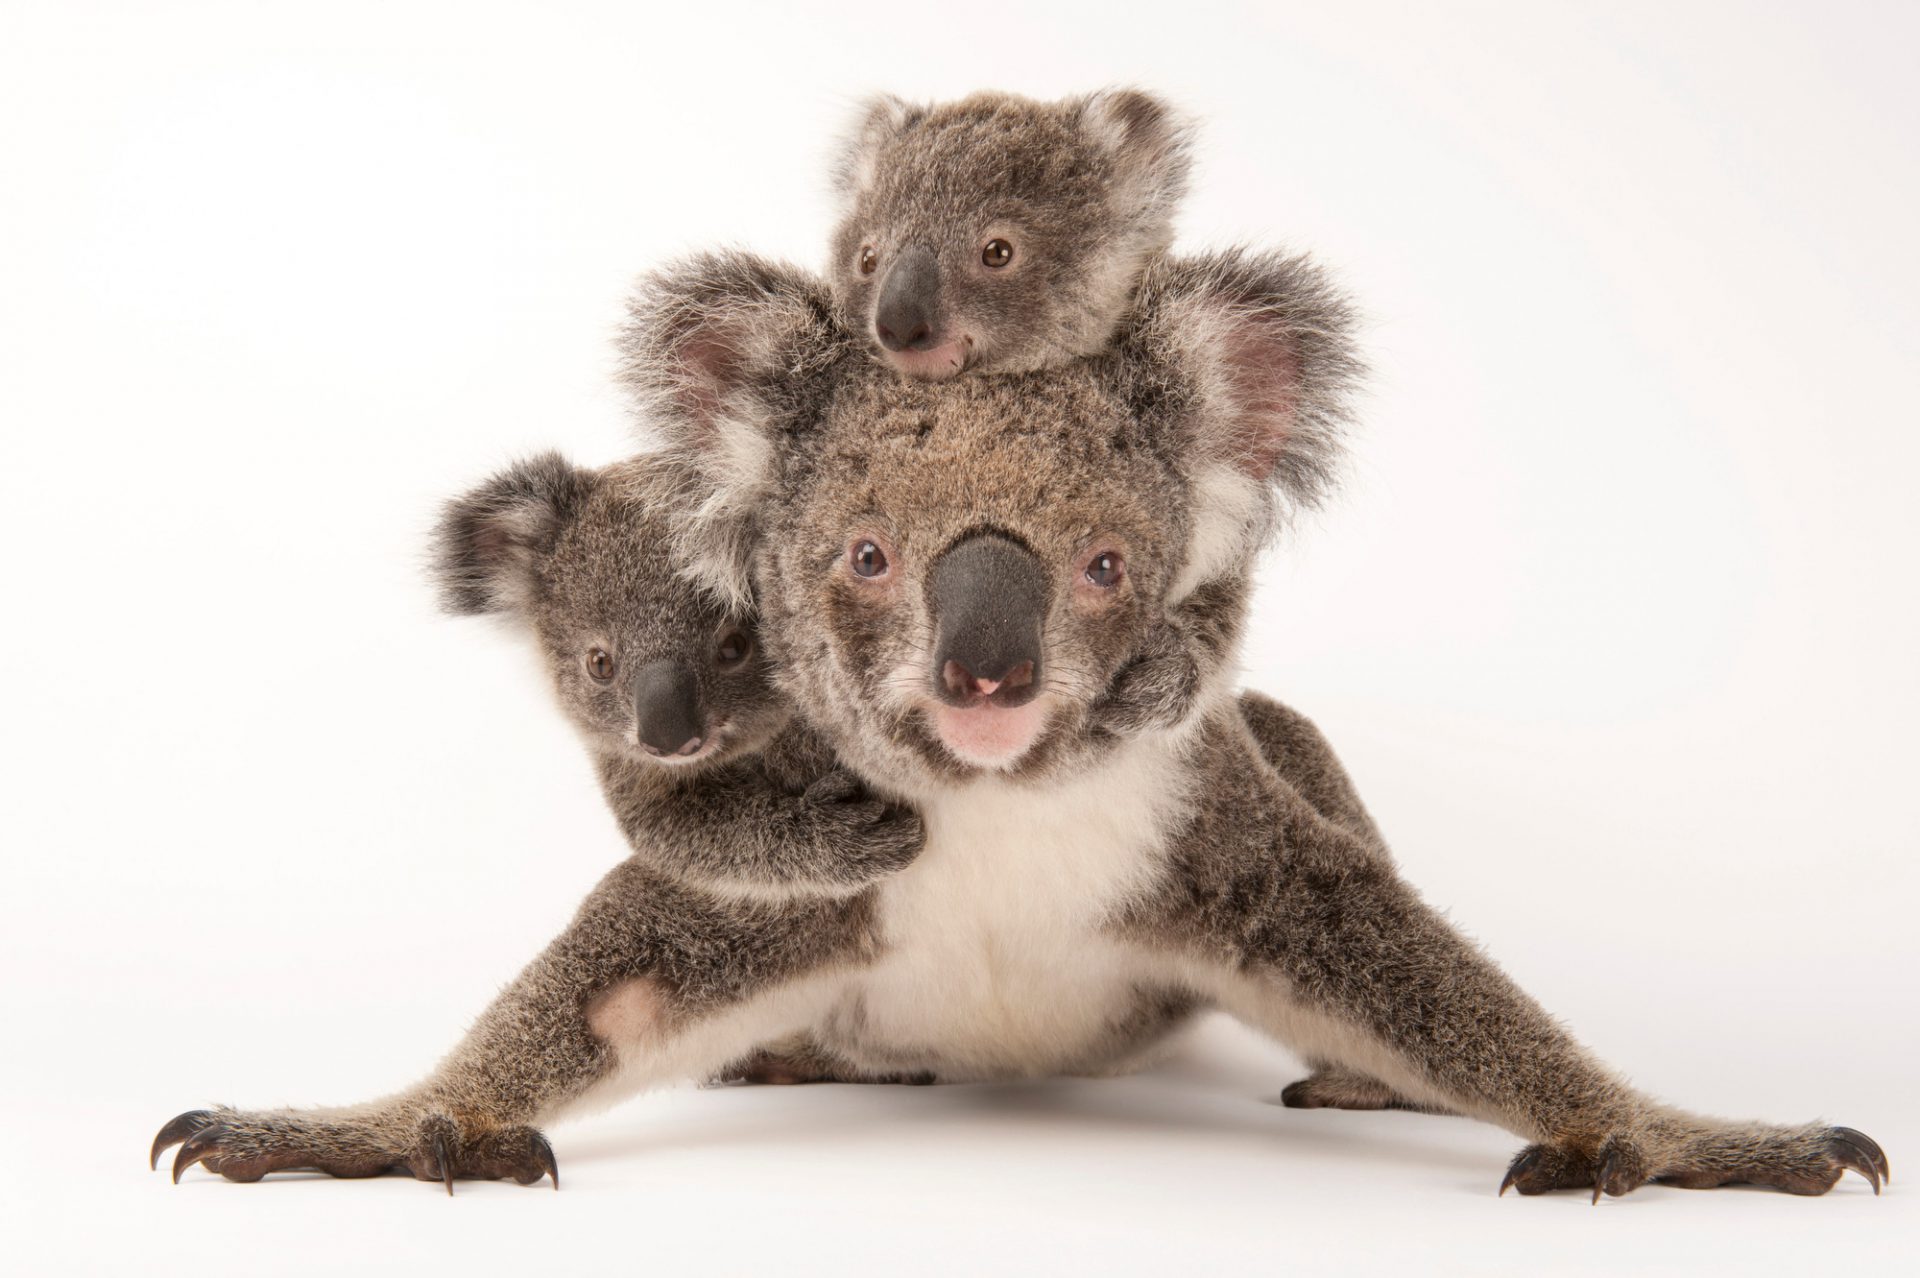 A family of koalas